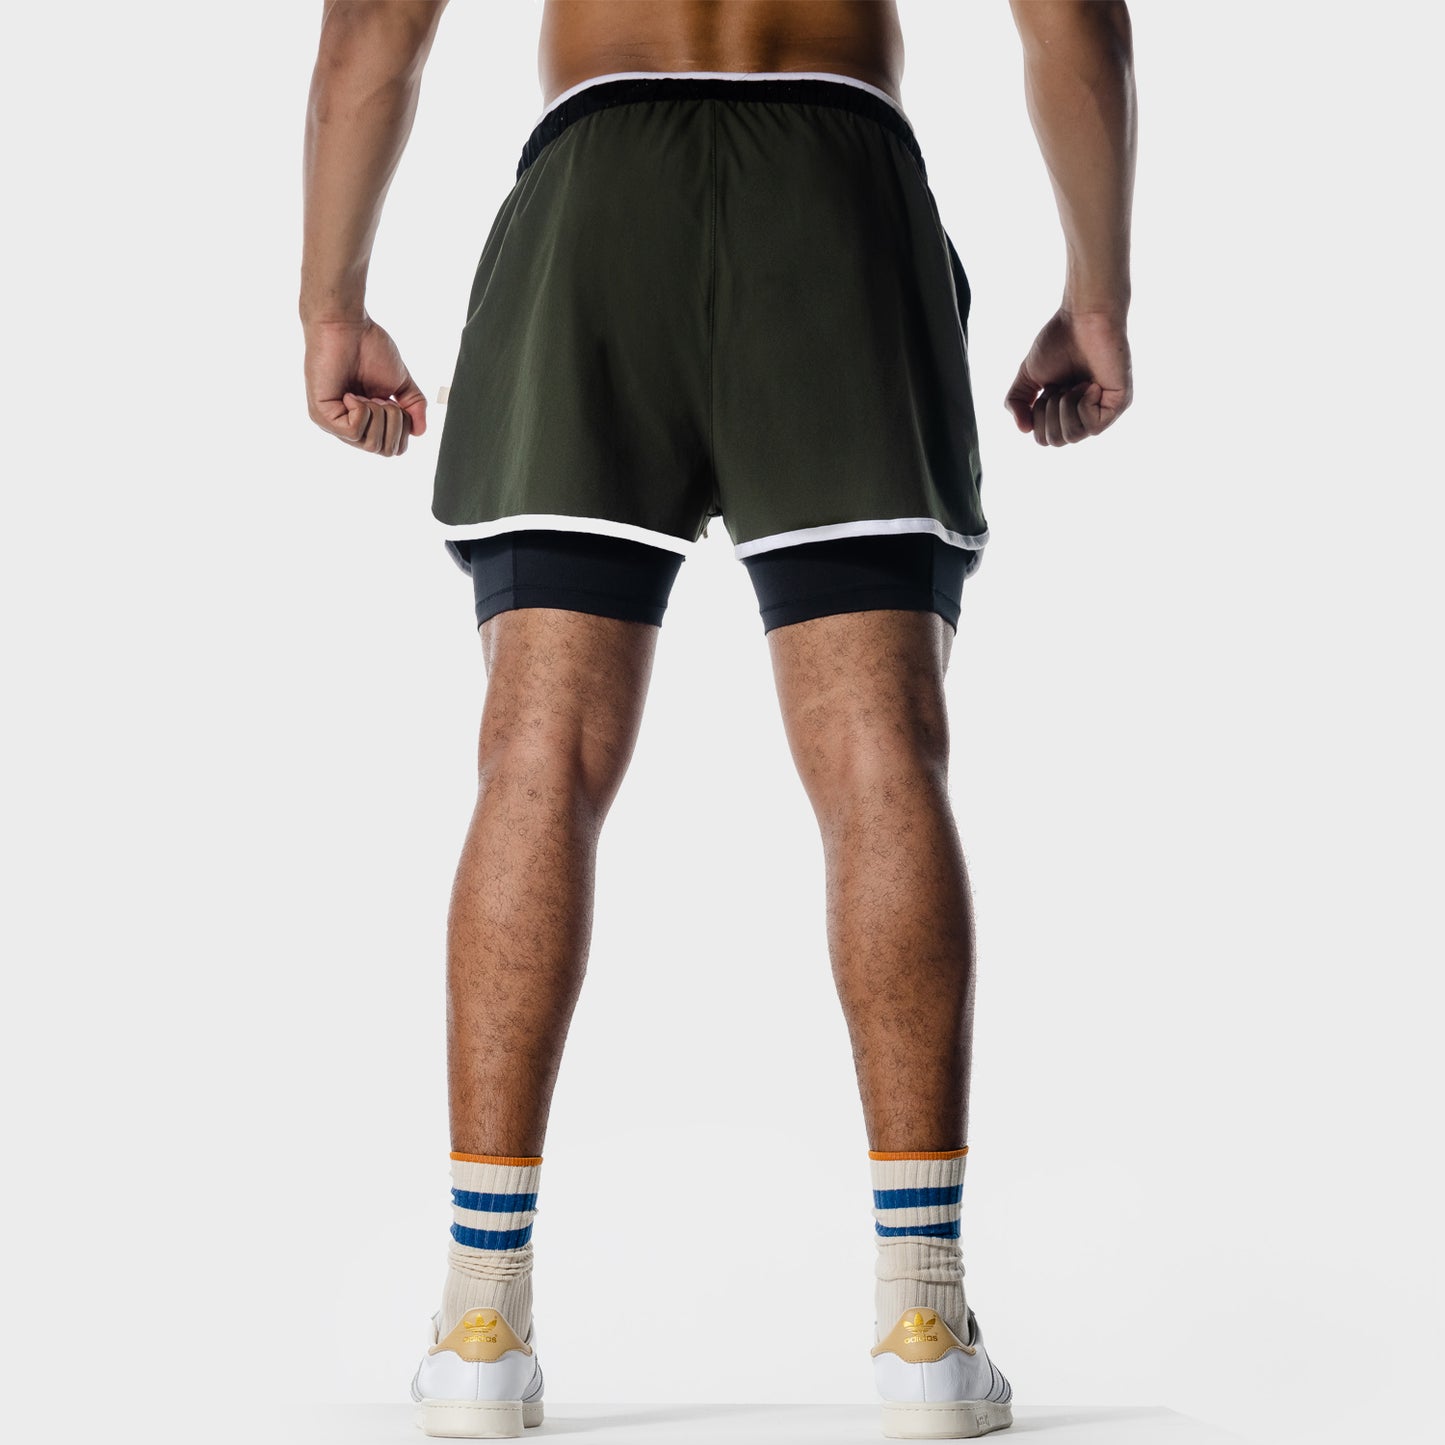 SQUATWOF-gym-wear-golden-era-2-in-1-shorts-green-workout-shorts-for-men